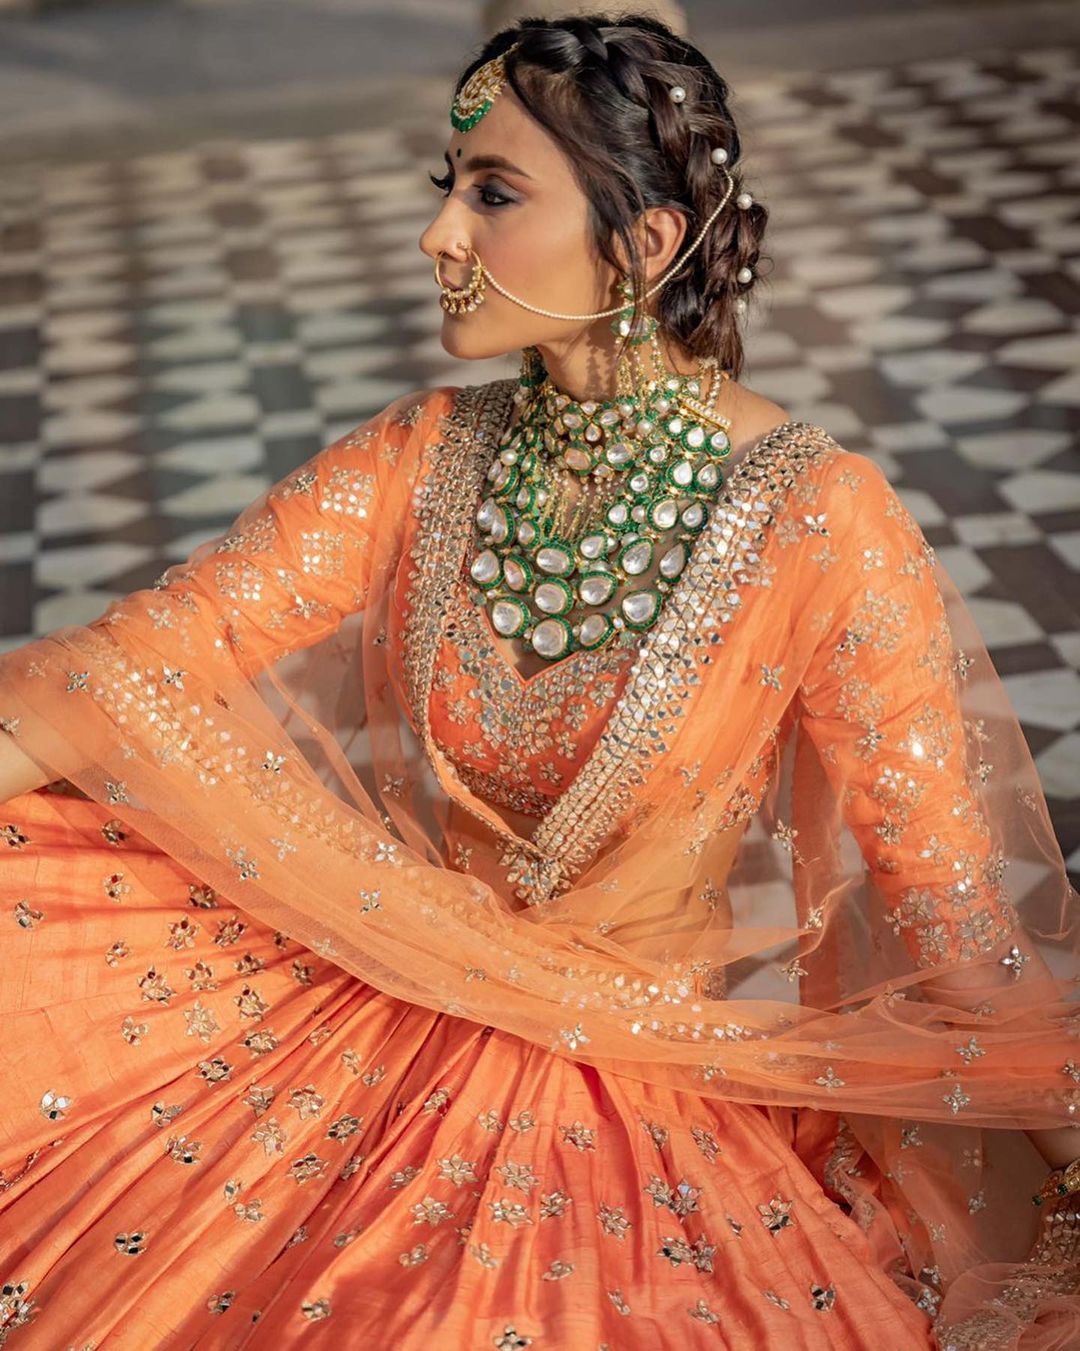 A look at Kiara Advani's statement wedding jewellery that took her stunning  bridal looks up a notch | PINKVILLA